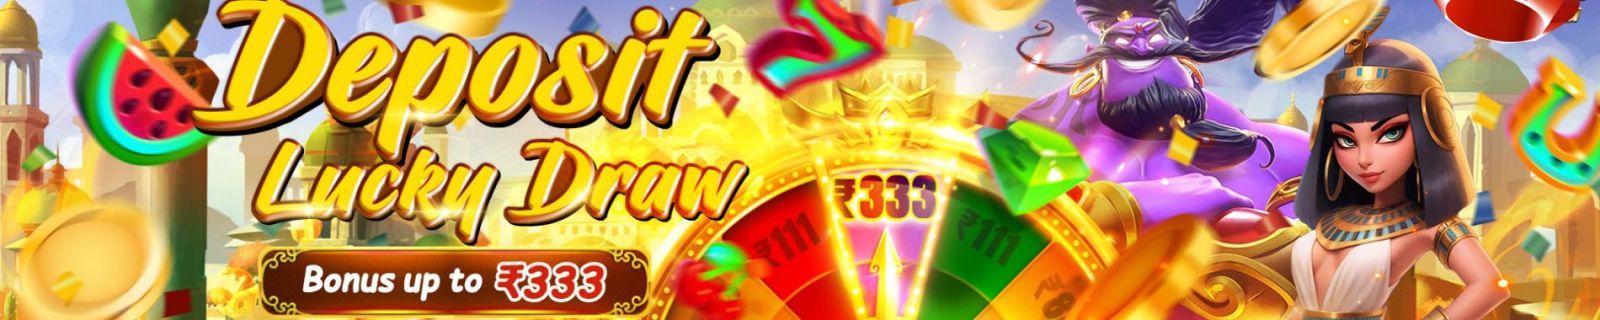 ₹333 Daily Deposit Lucky Draw Bonus Casino